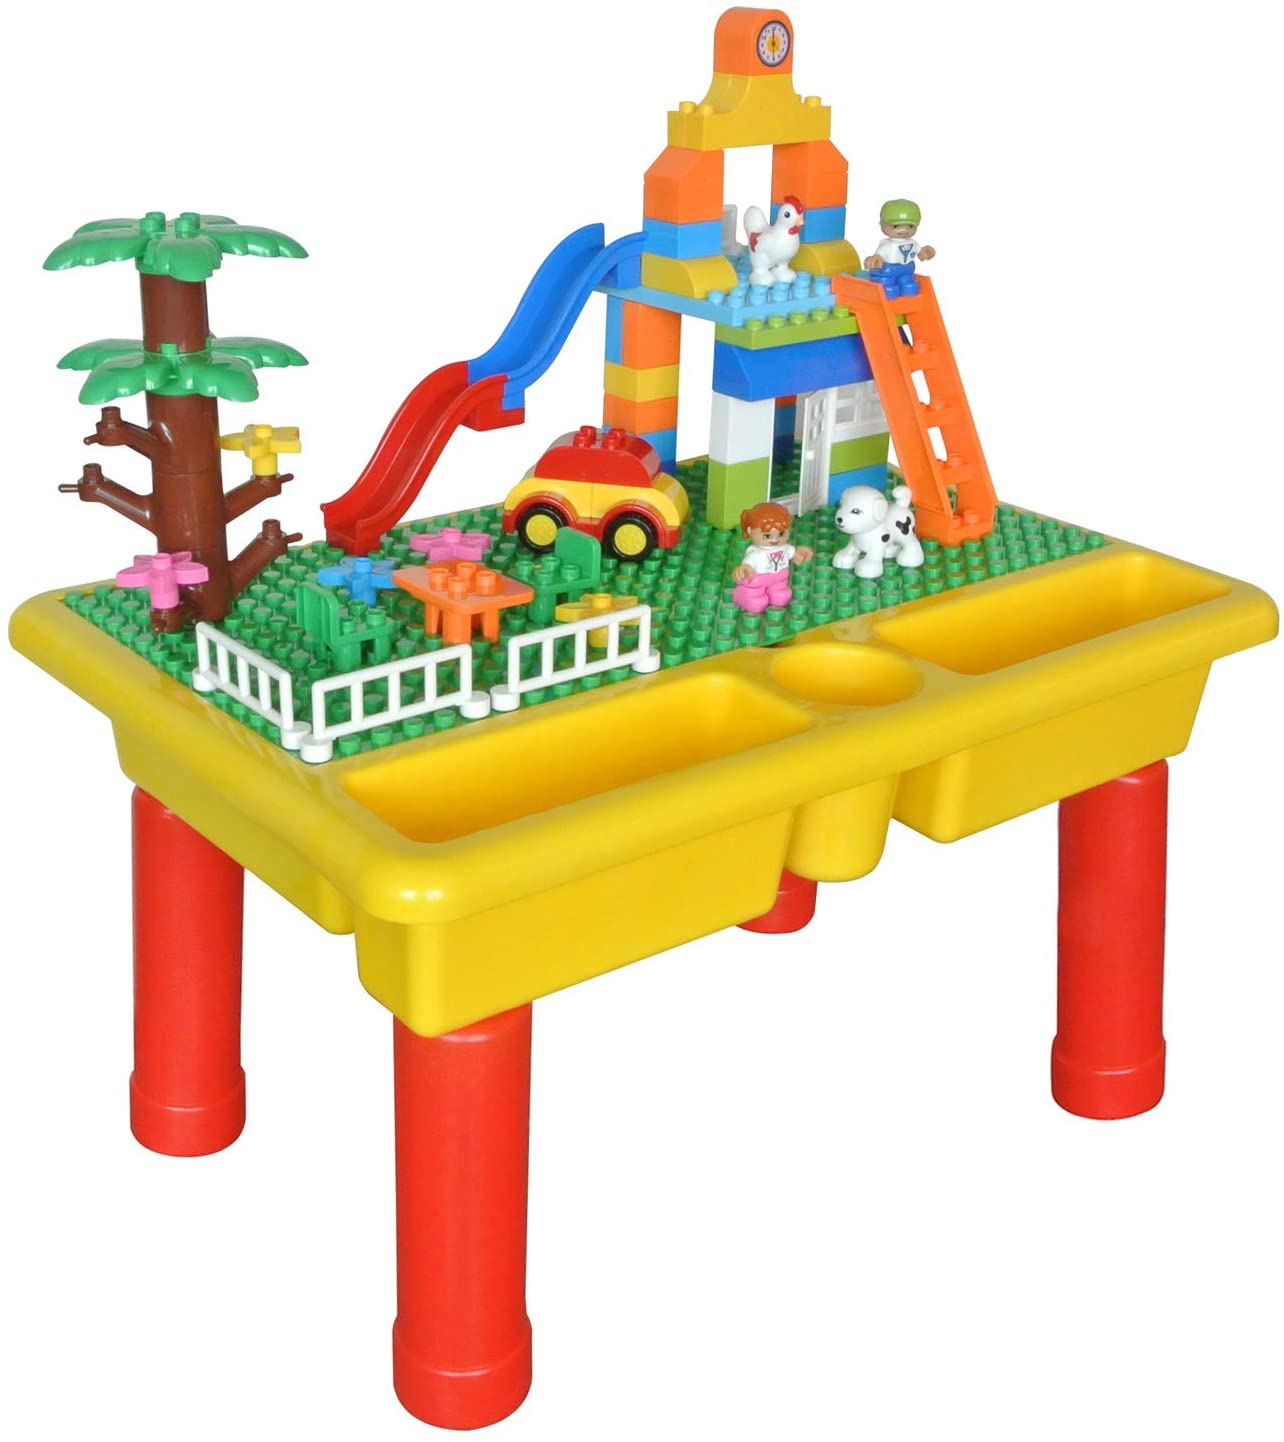 Large Toy Building Bricks & Play Table $29.24 (REG$44.99)